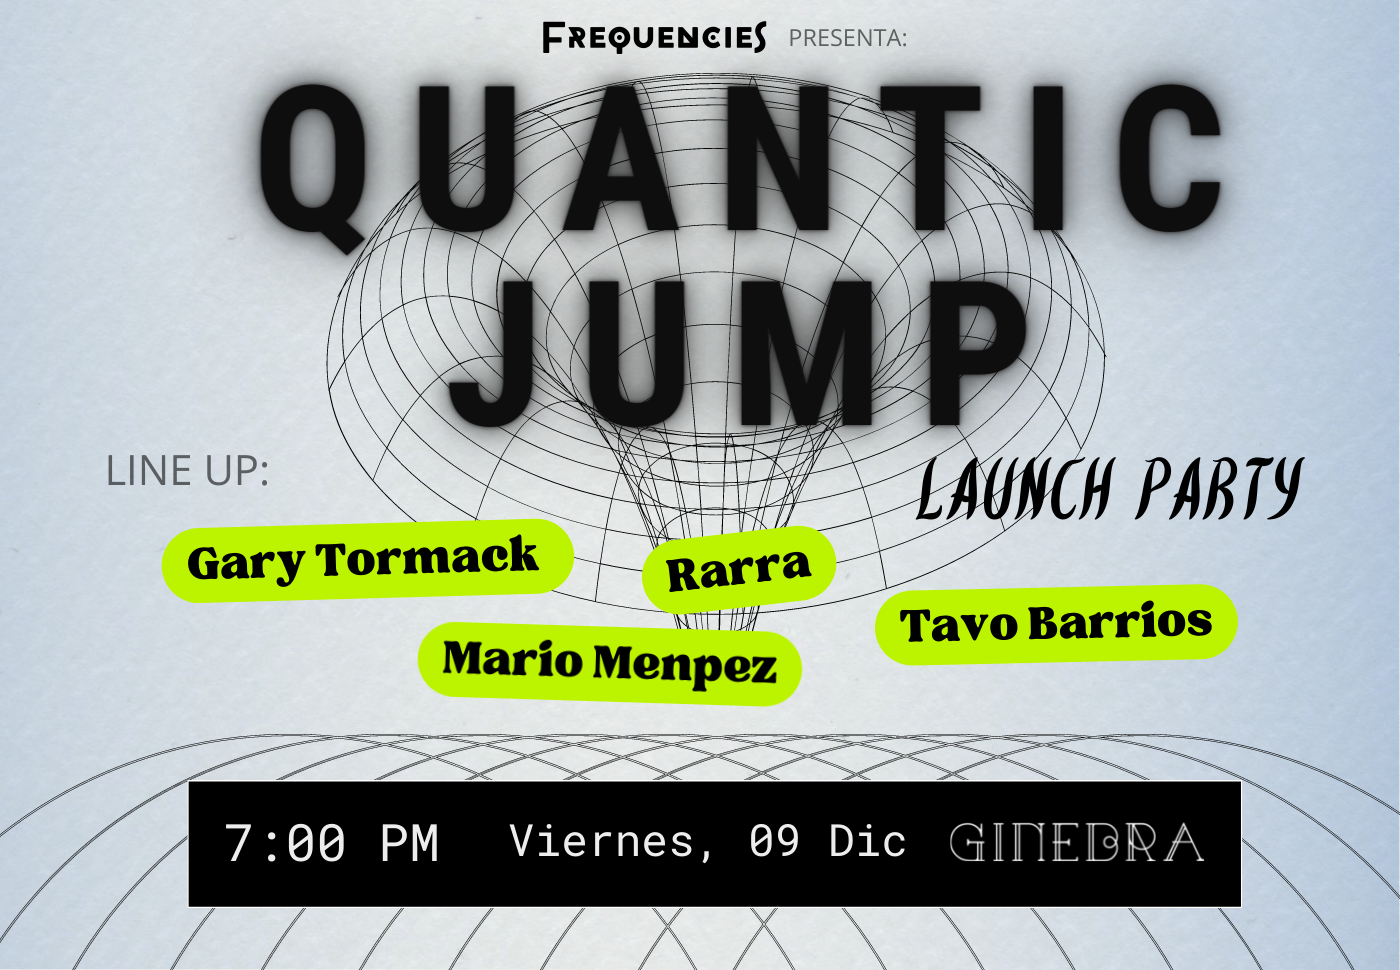 Frequencies te invita al evento Quantic Jump